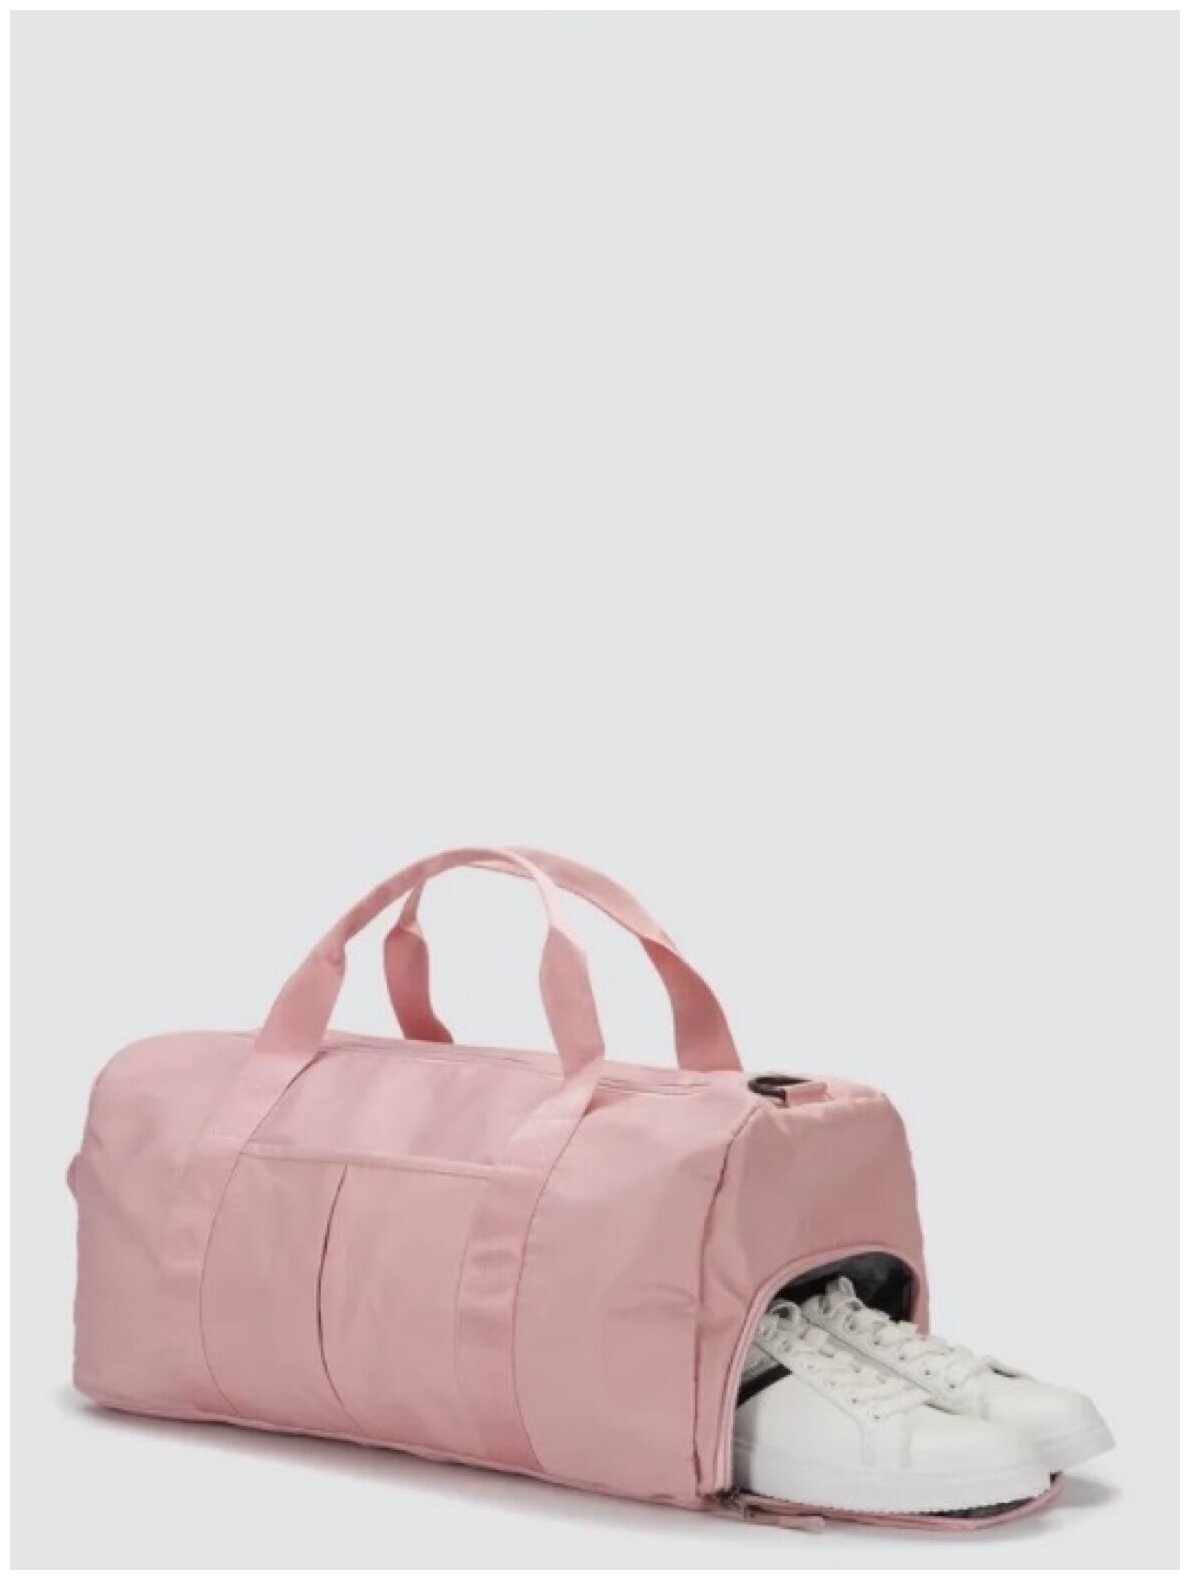 Спортивная дорожная сумка Dred & Dredi розовая